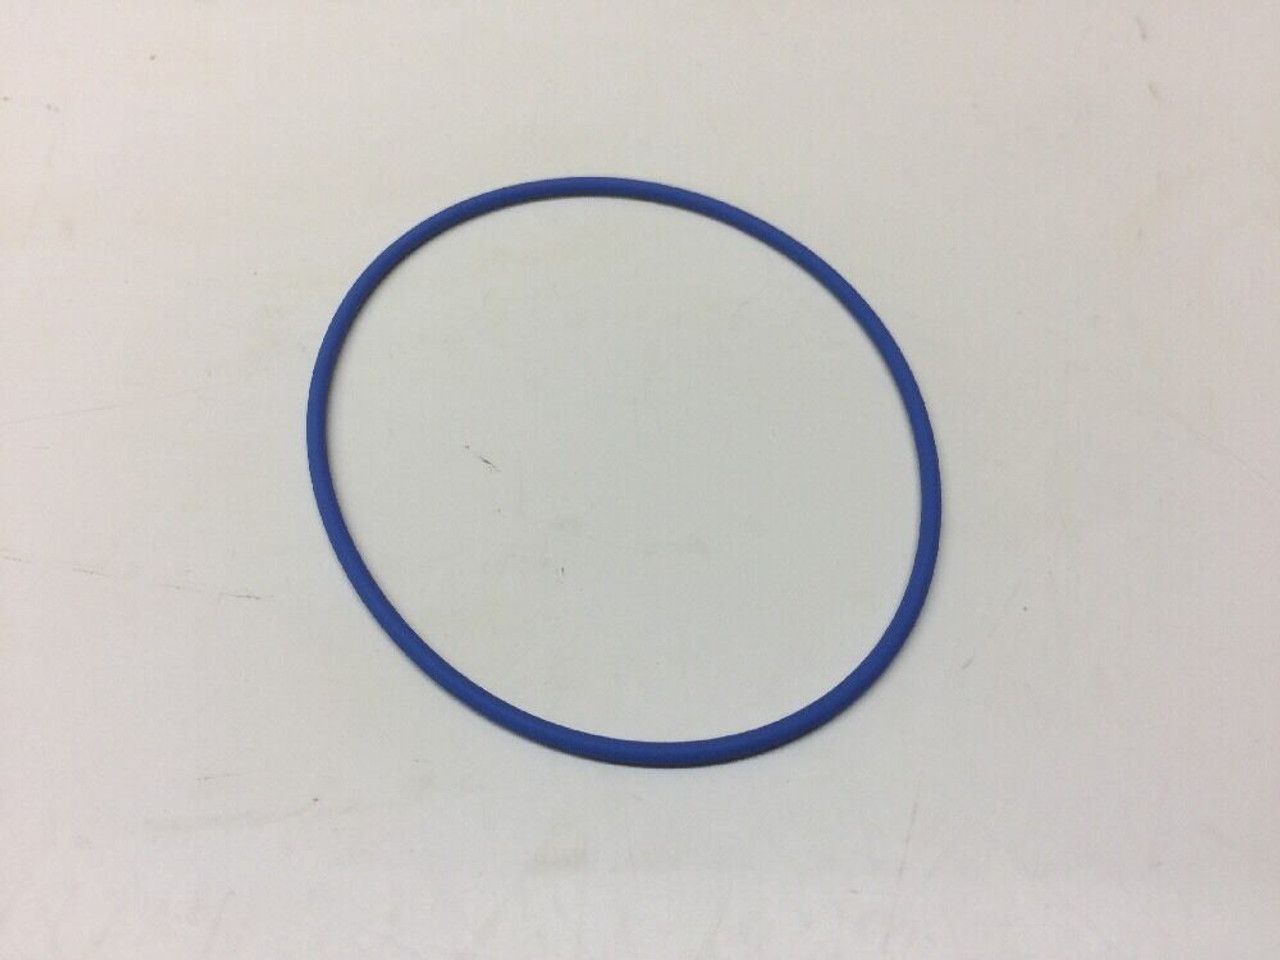 10x Kapco Rubber O-Ring Intl' Seal 2" DIA. M25988/1-036 